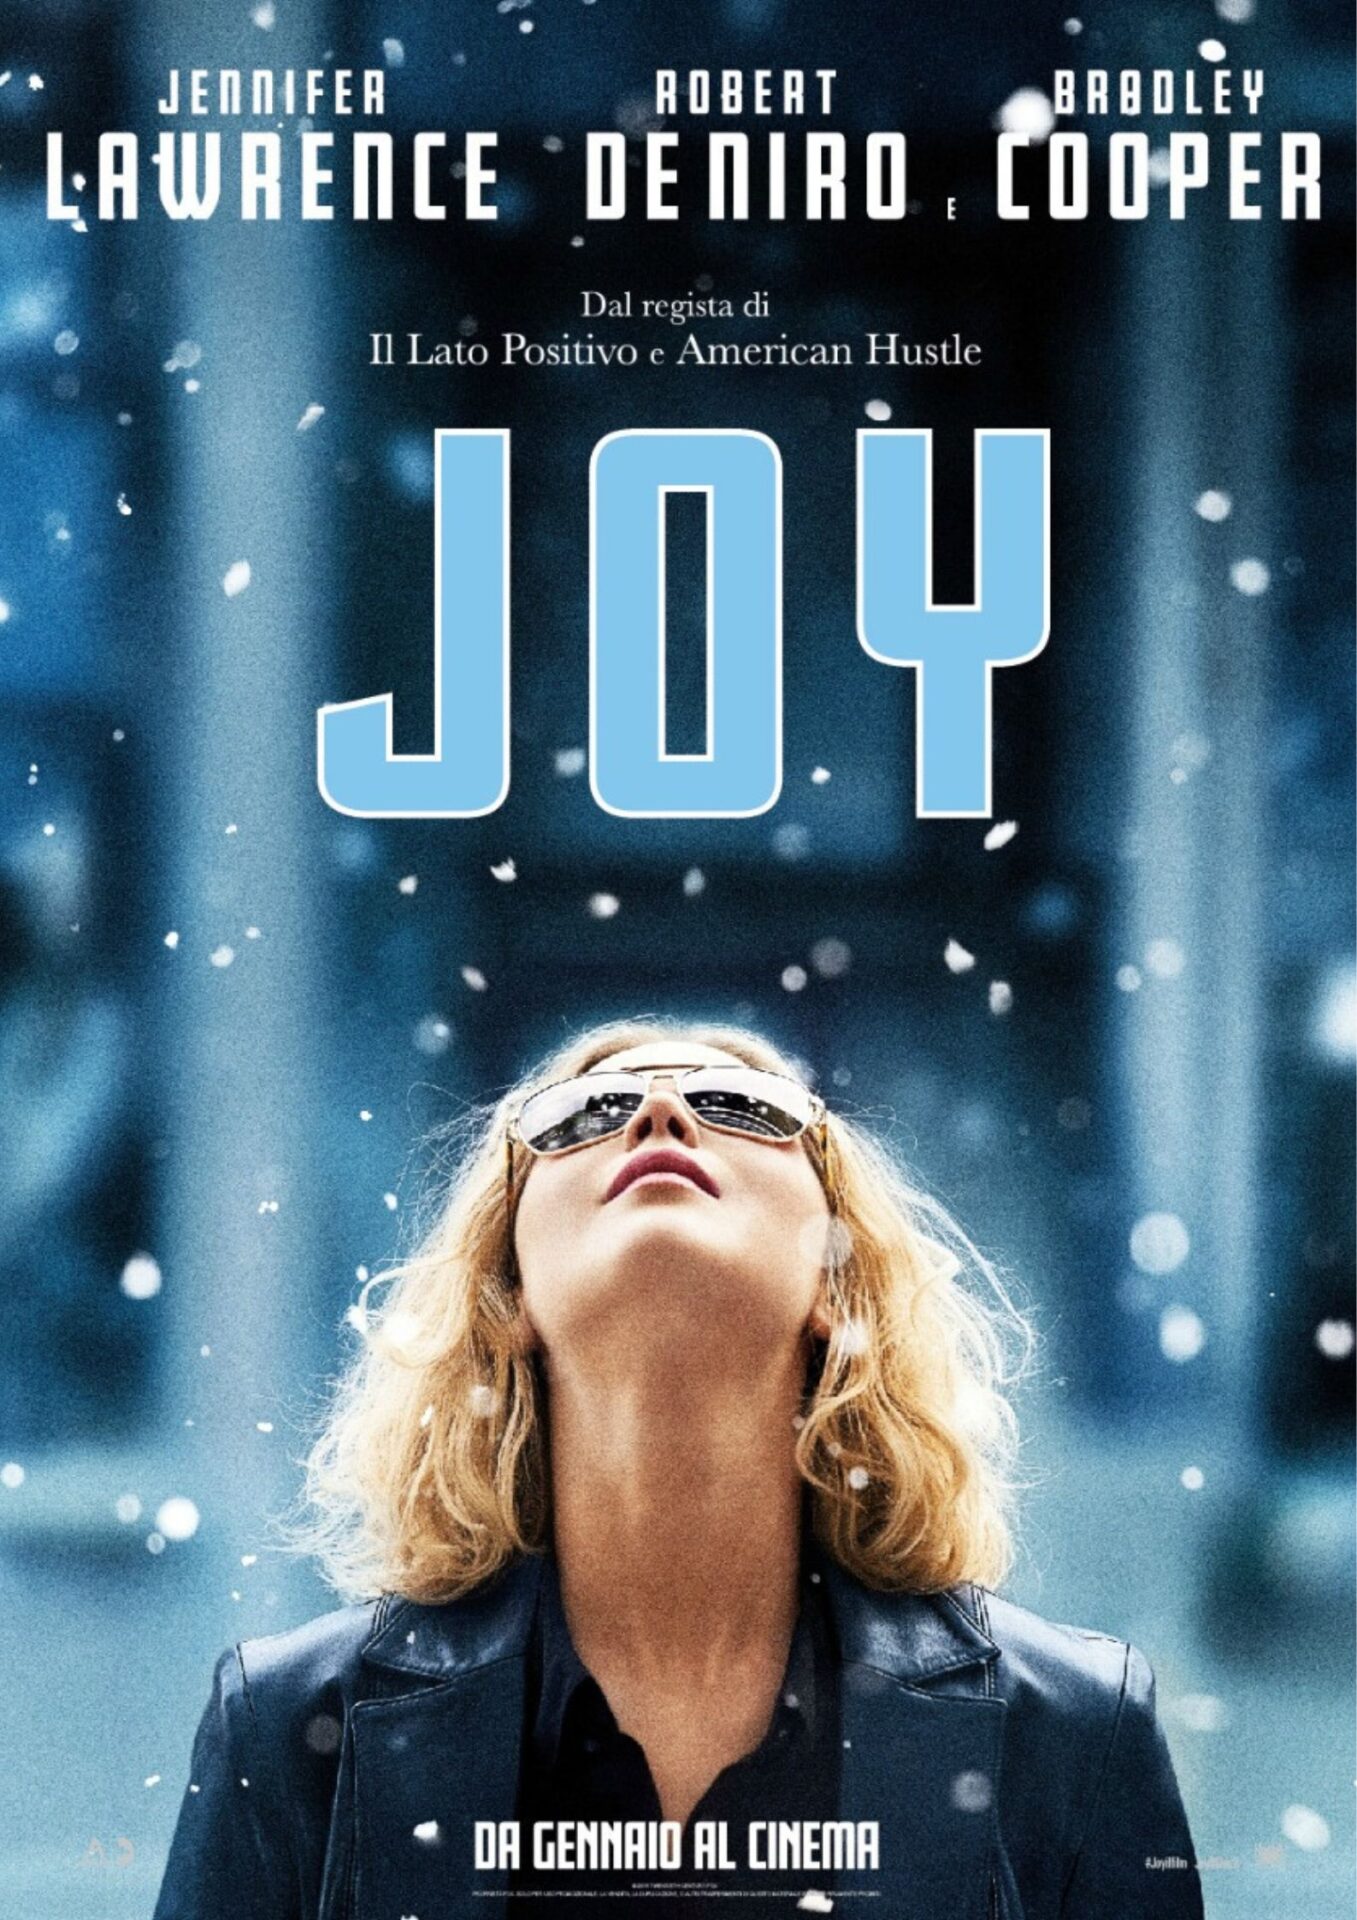 Joy - Jennifer Lawrence, locandina